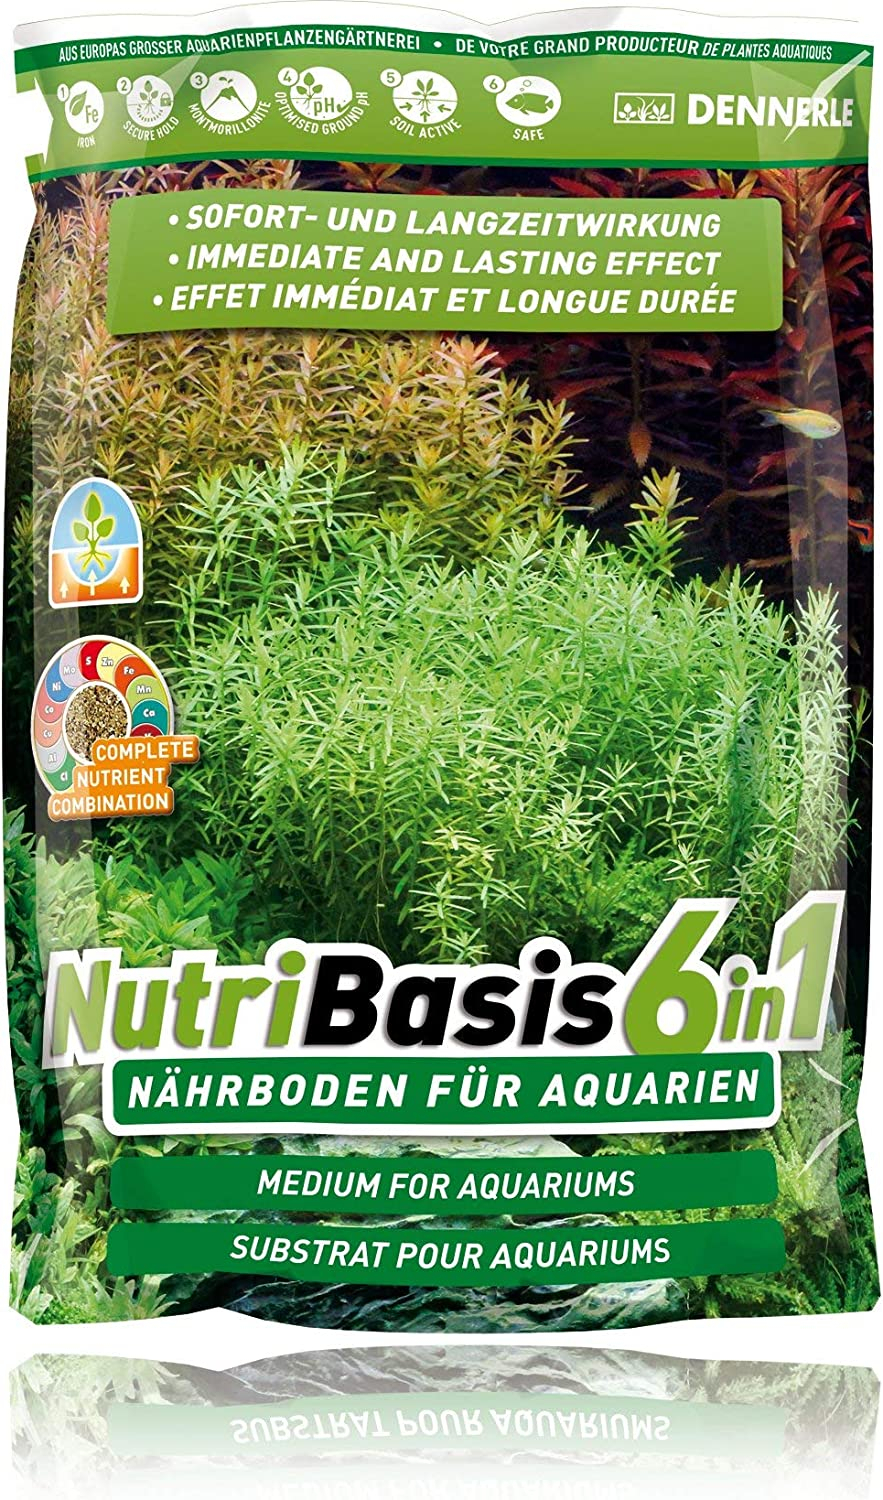 Dennerle NutriBasis 6in1 Substrat für Aquarien